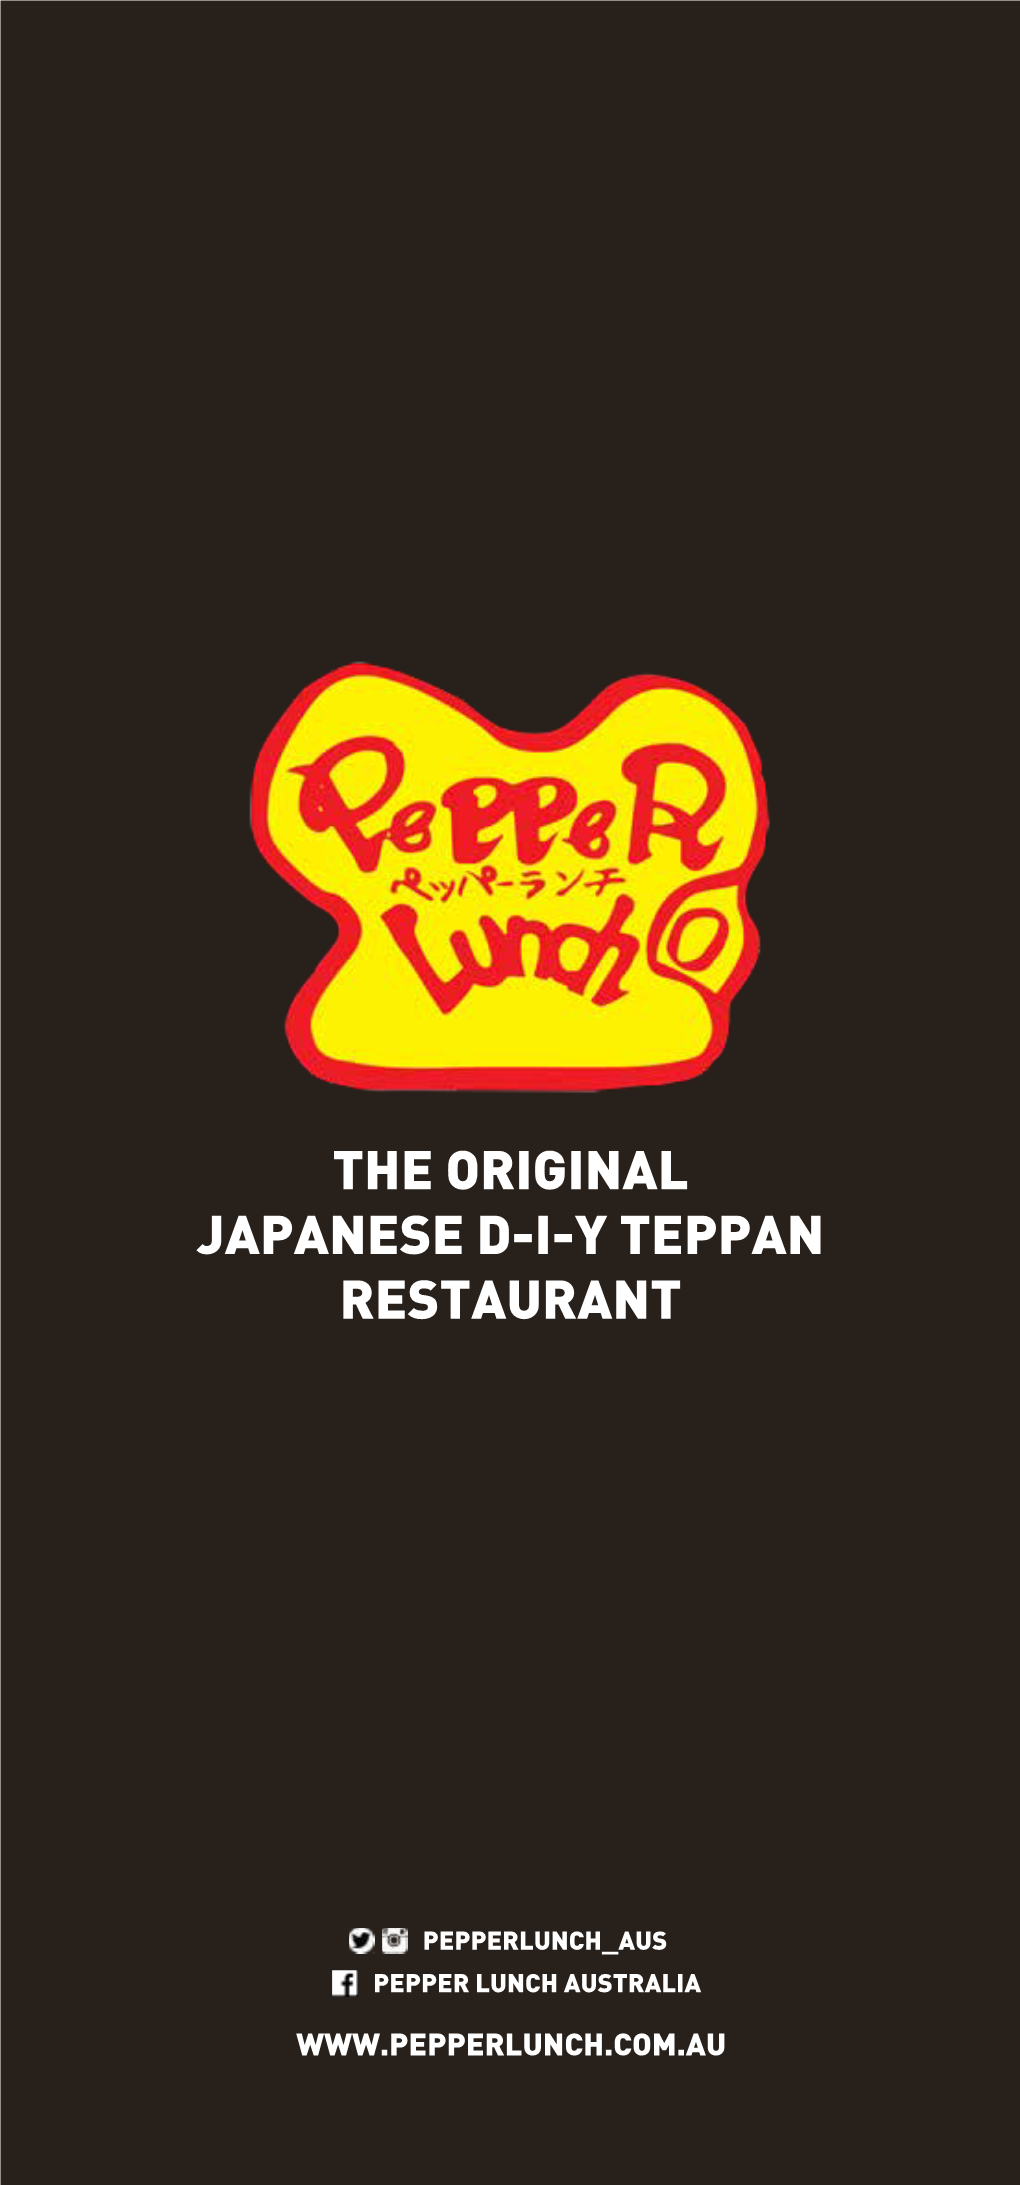 The Original Japanese D-I-Y Teppan Restaurant